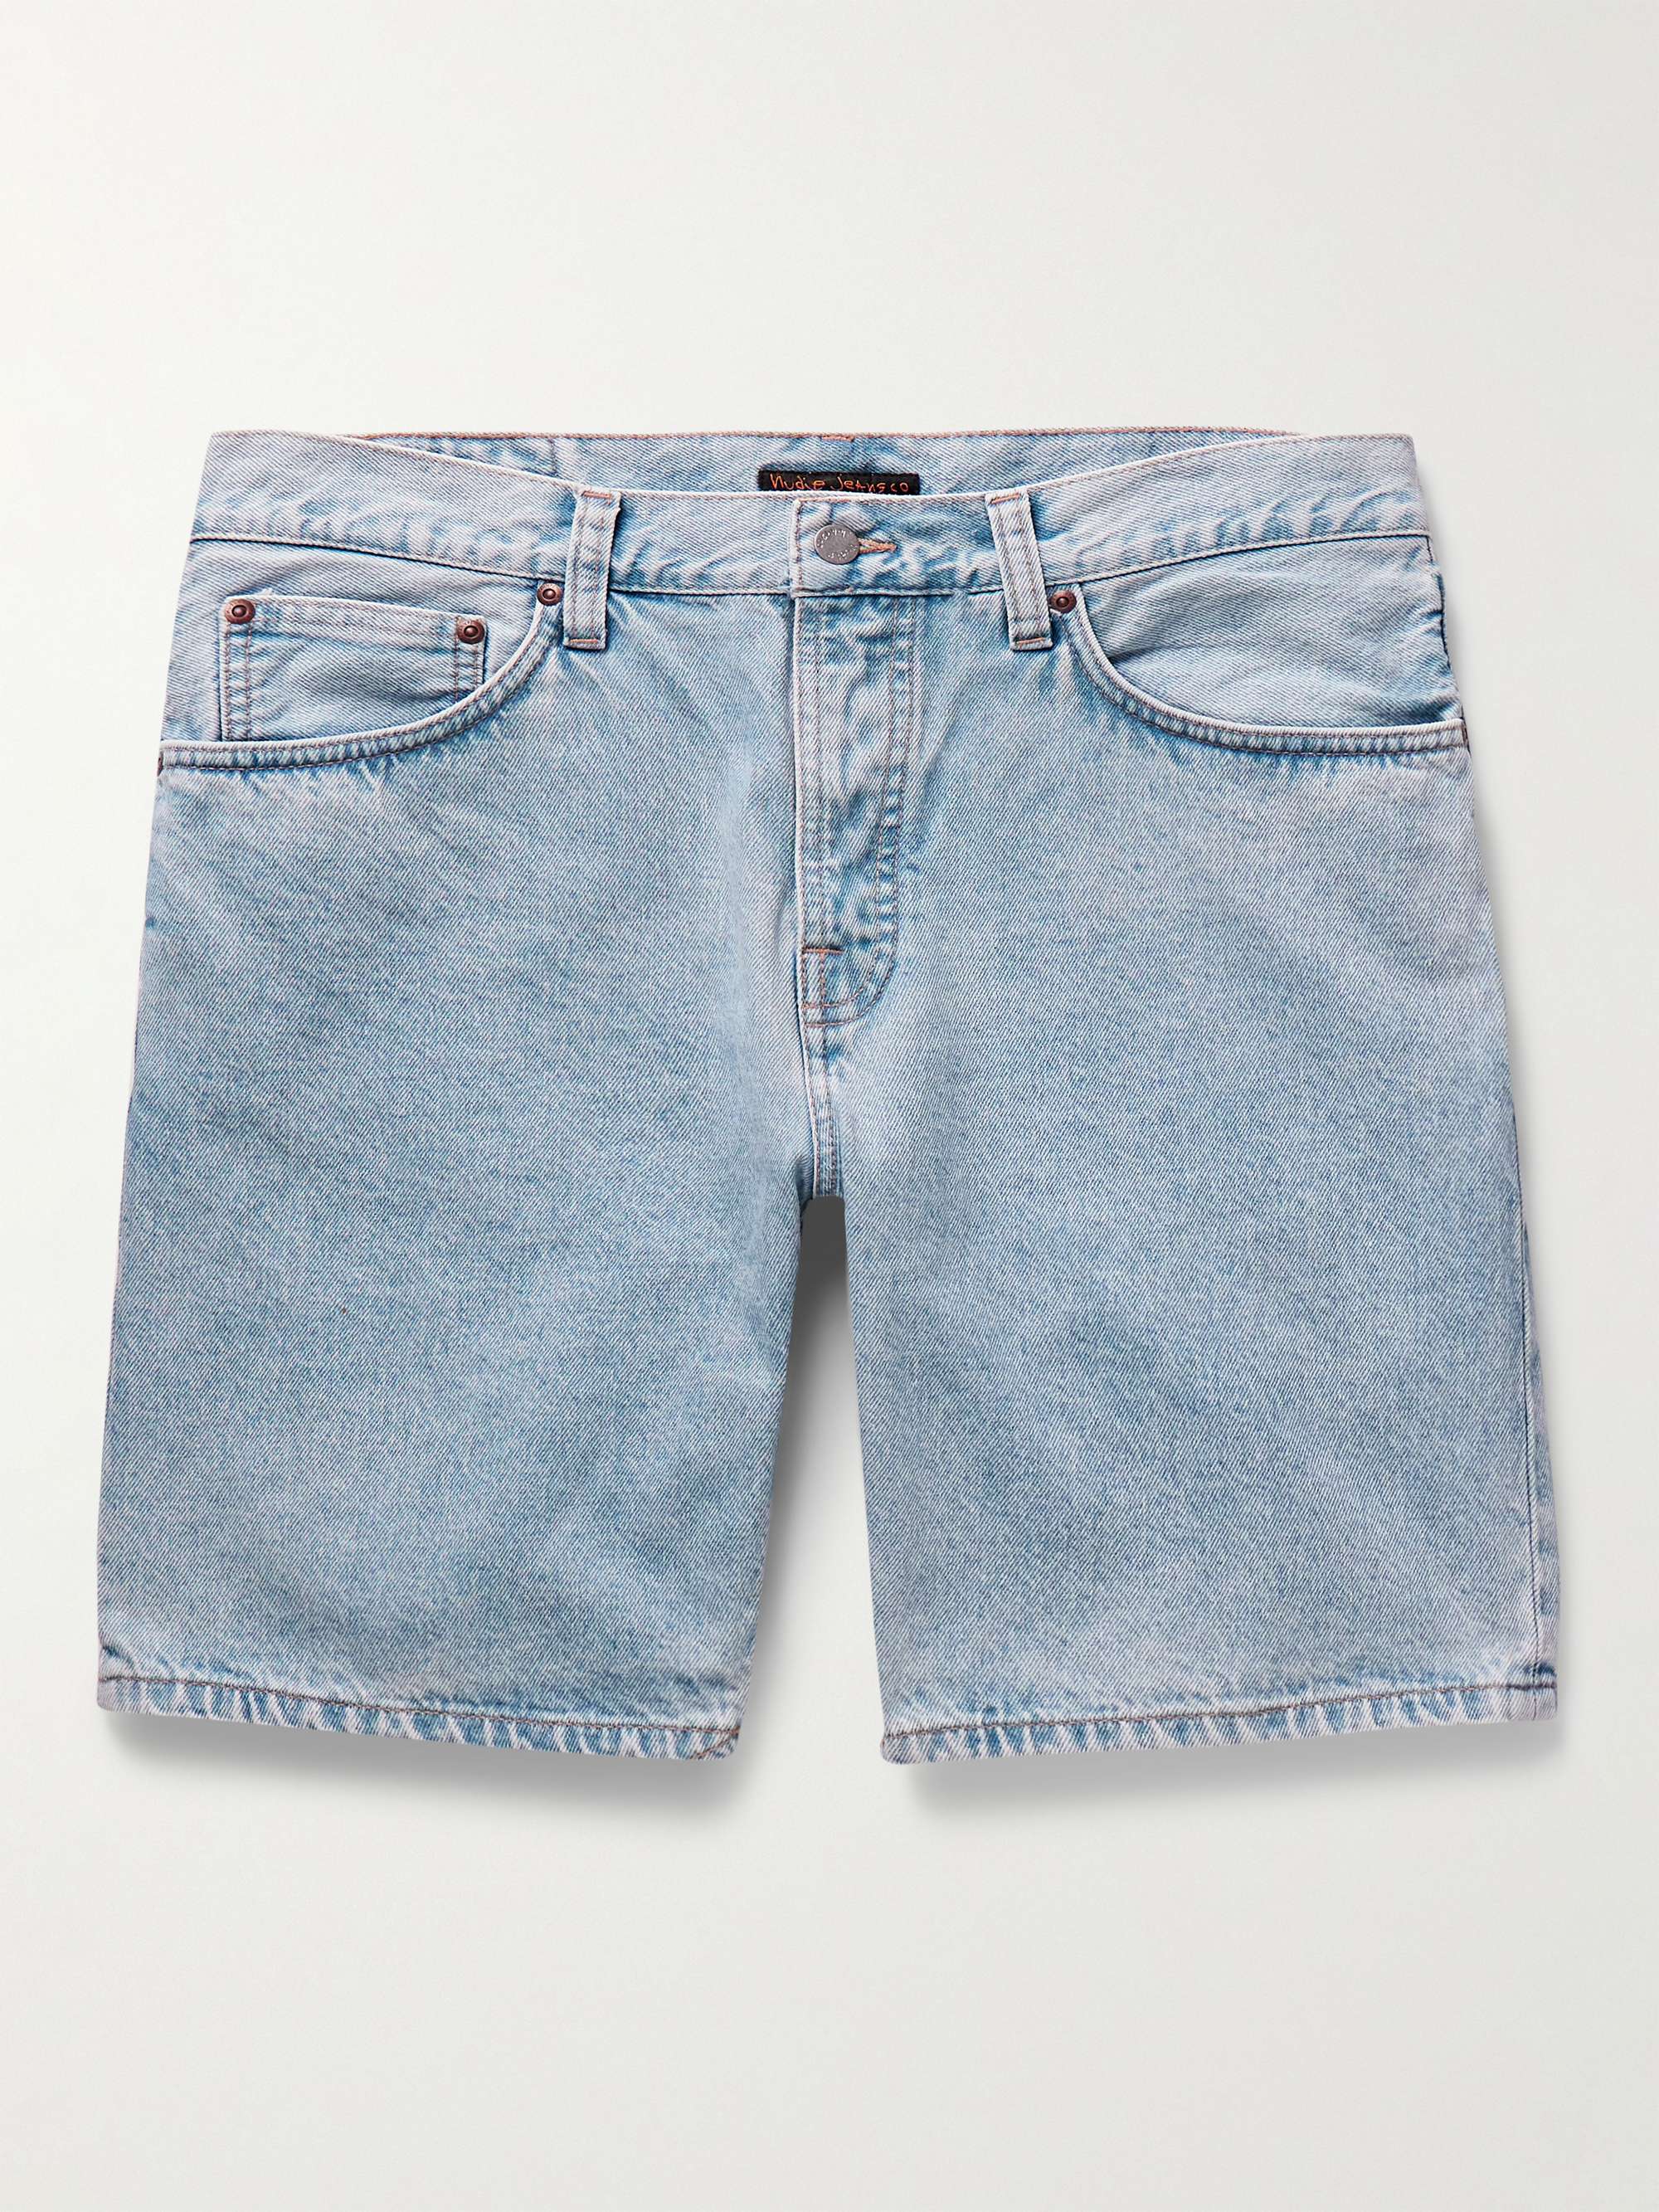 Nudie Jeans Seth Straight-Leg Denim Shorts - Men - Light Denim Shorts - XXL